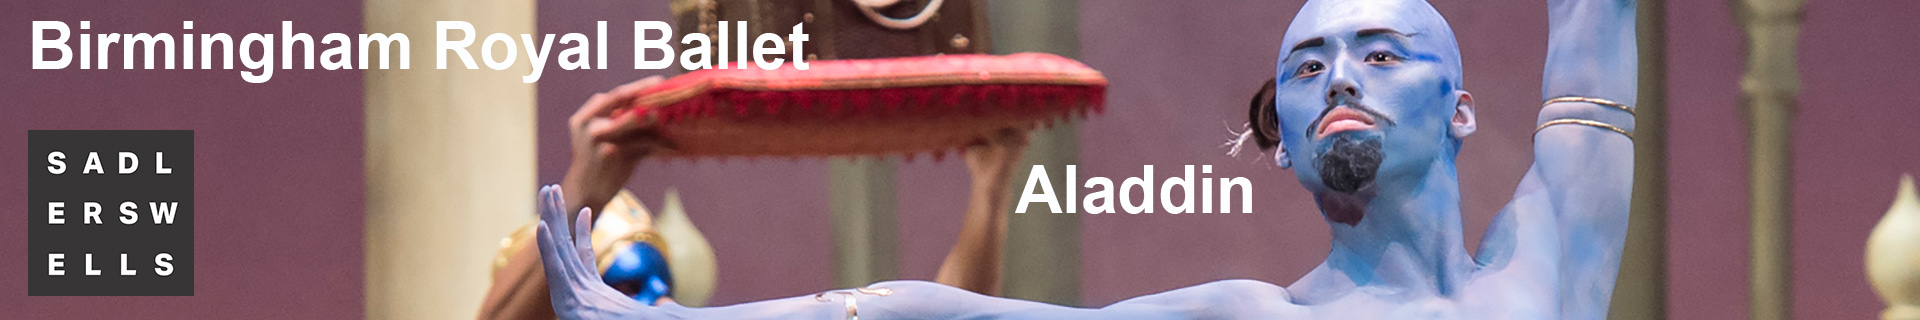 Birmingham Royal Ballet - Aladdin Header Image
